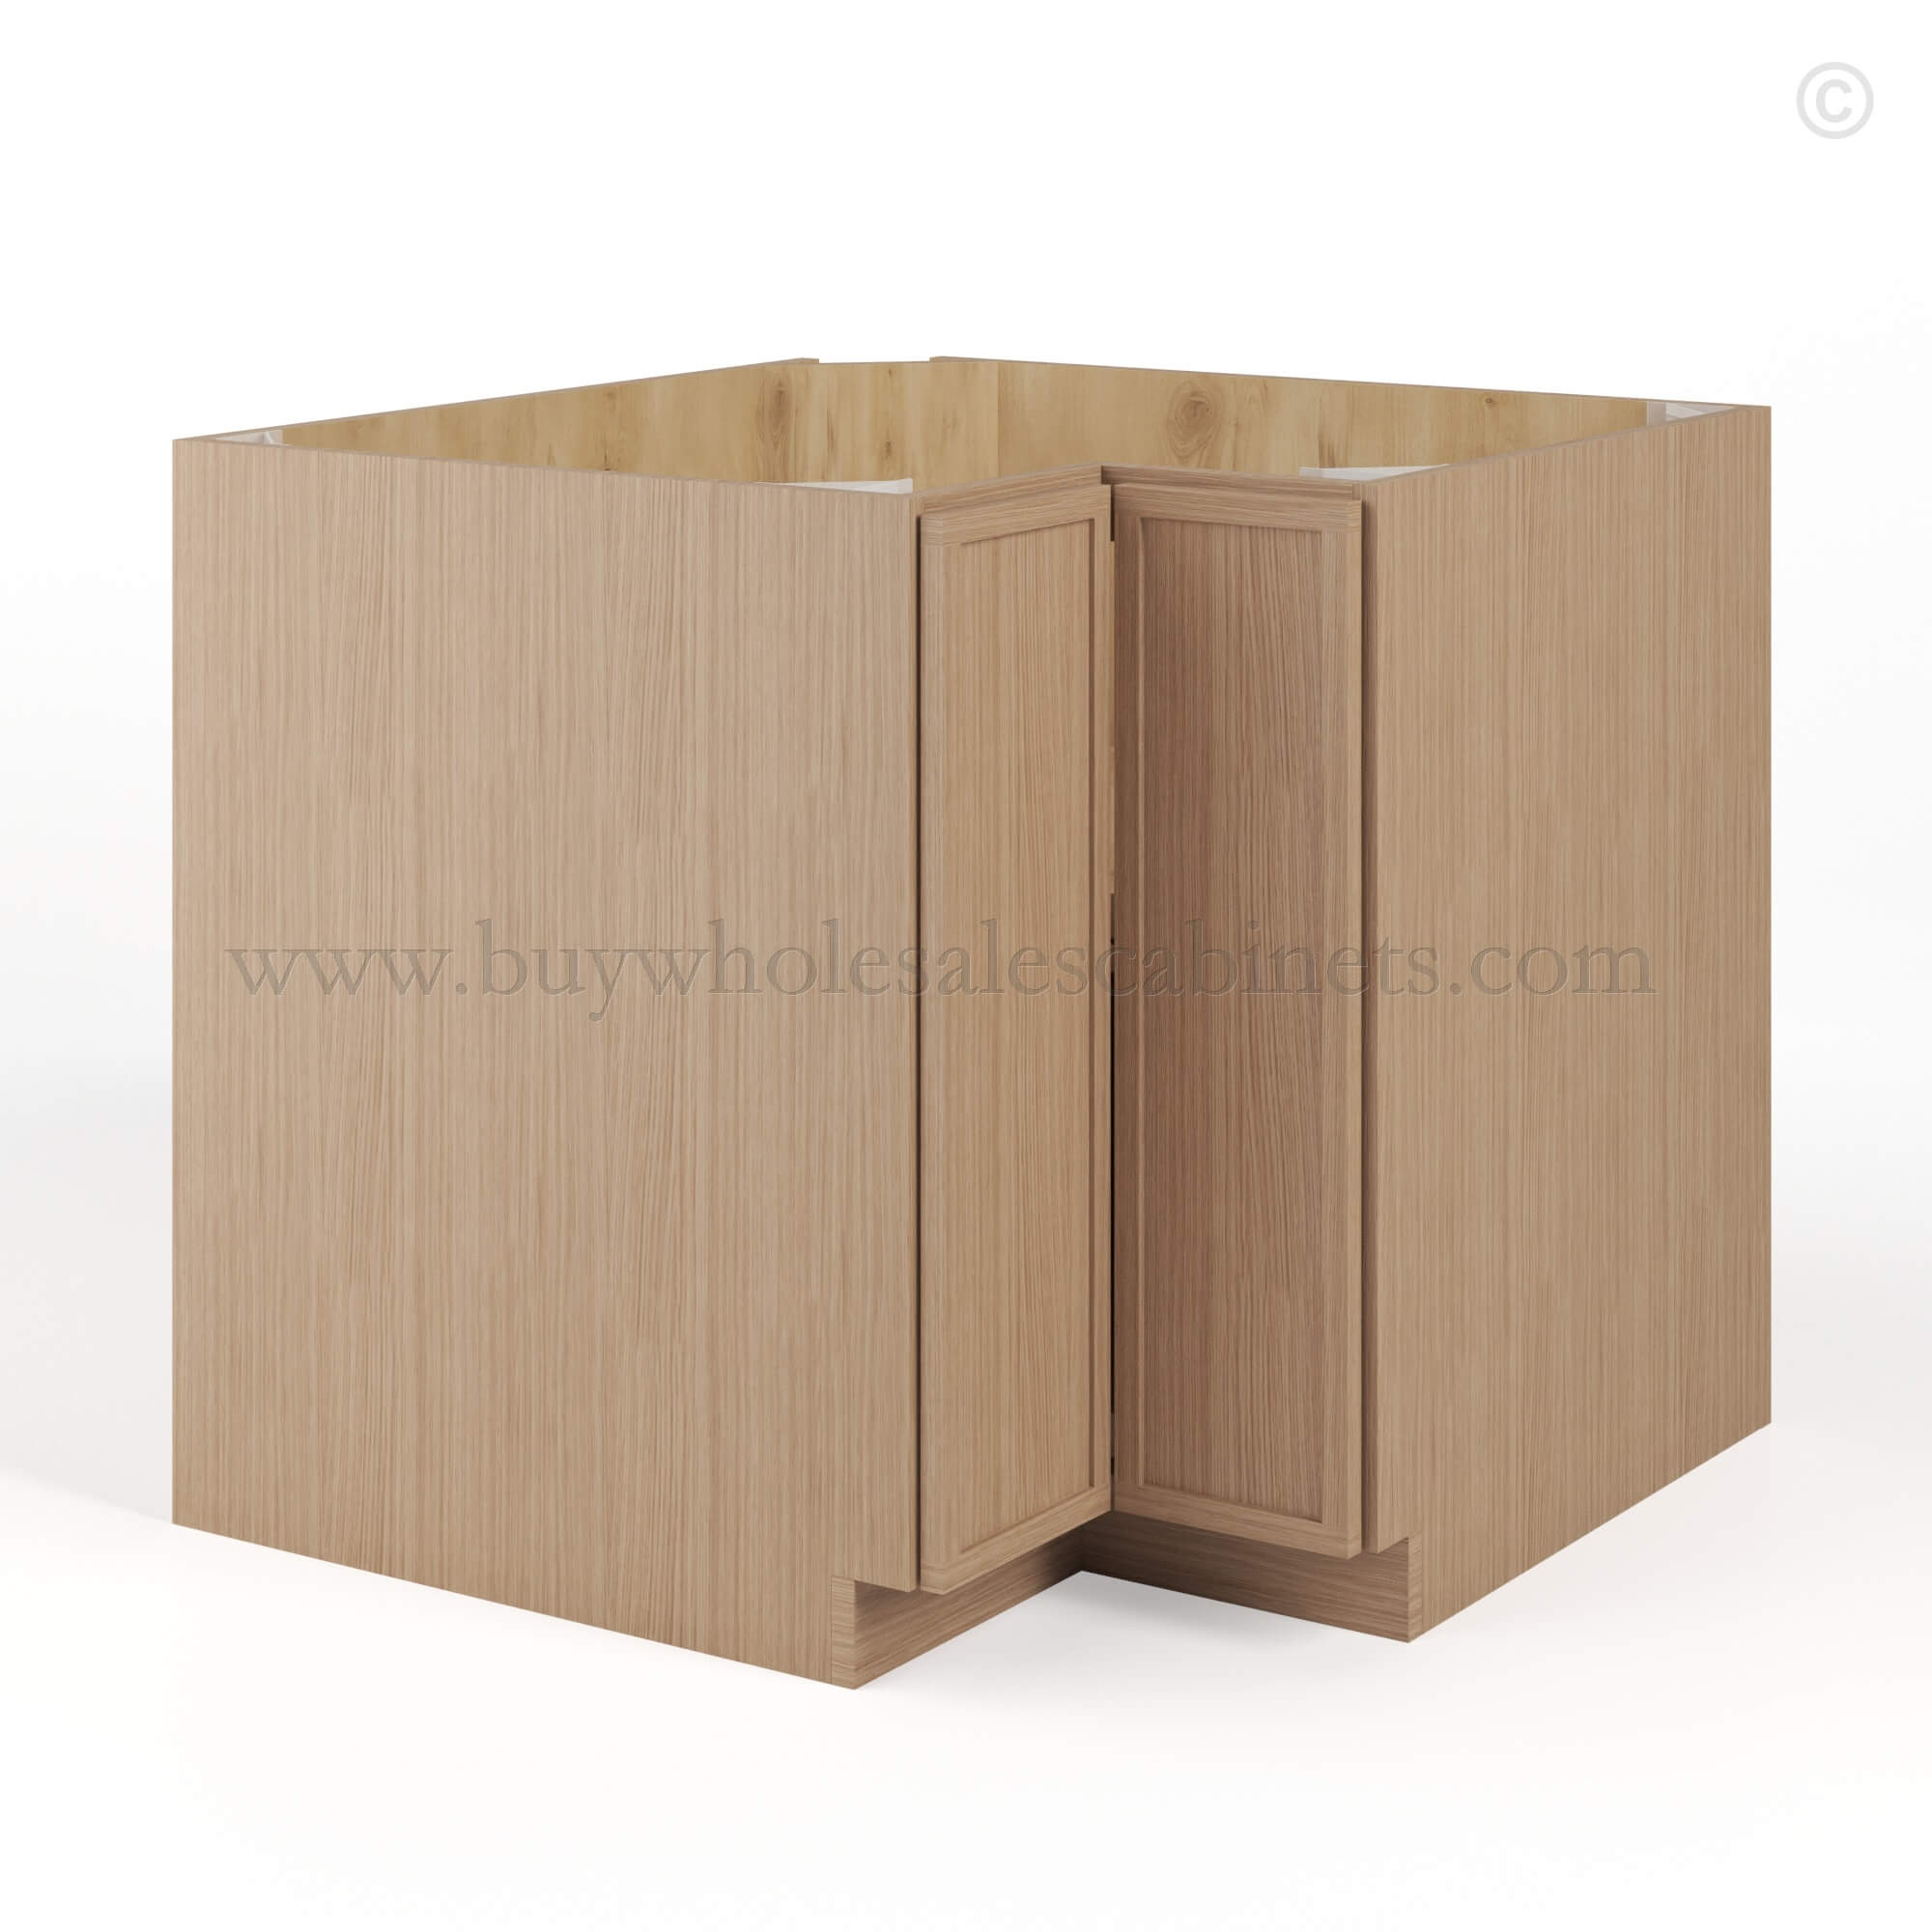 Slim Oak Shaker Easy Reach Base Cabinet, rta cabinets, wholesale cabinets